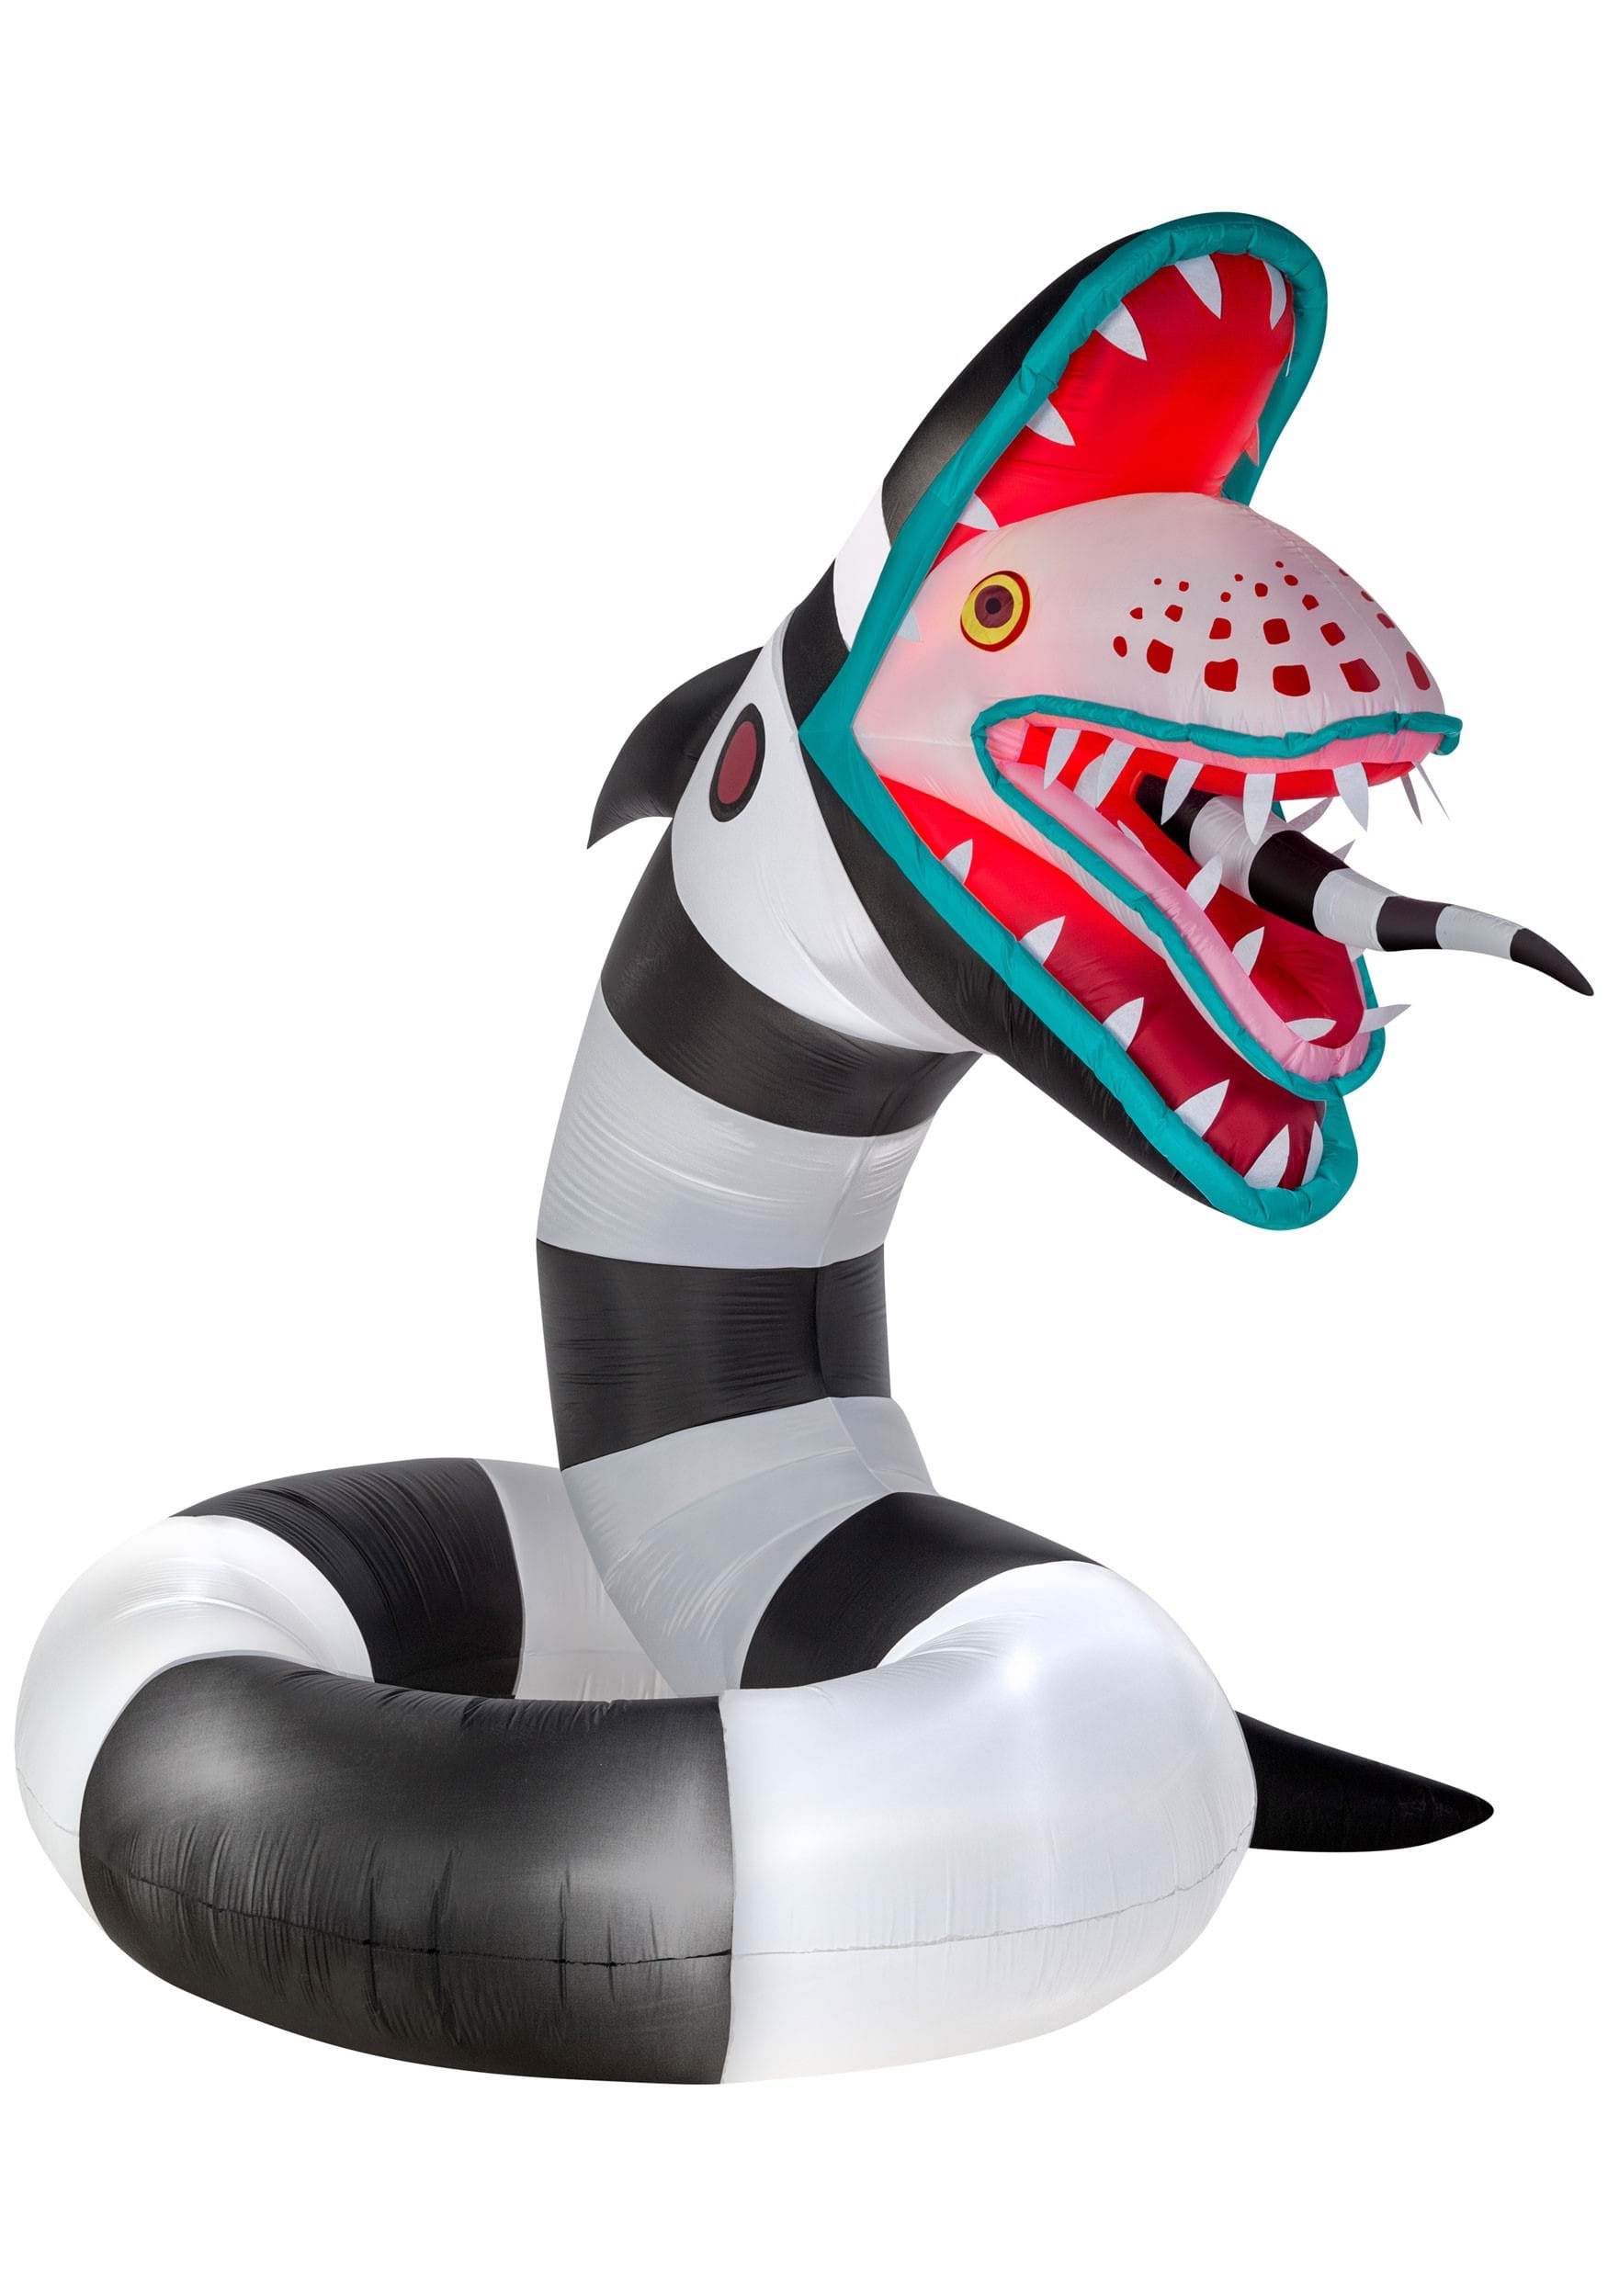 10FT Animated Inflatable Beetlejuice Sand Worm Decoration